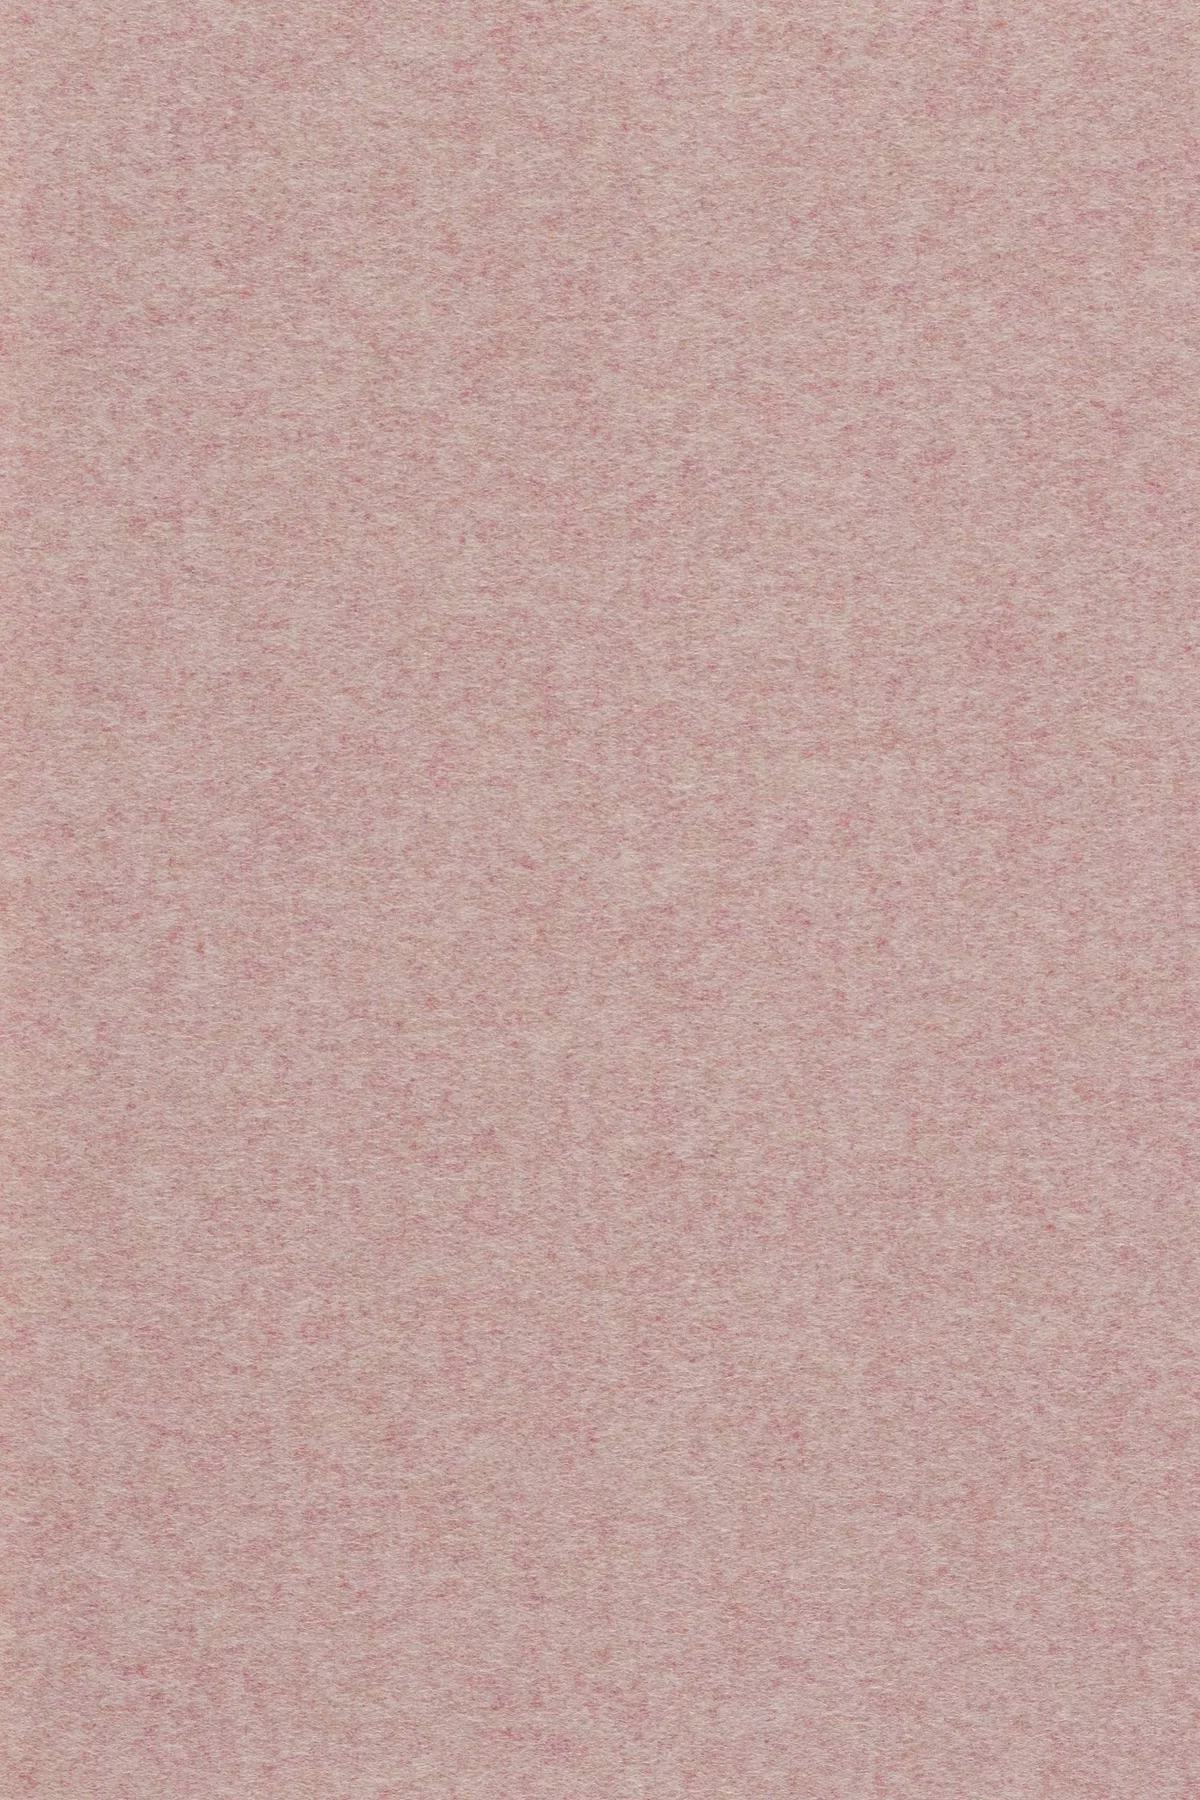 Fabric sample Divina MD 613 pink